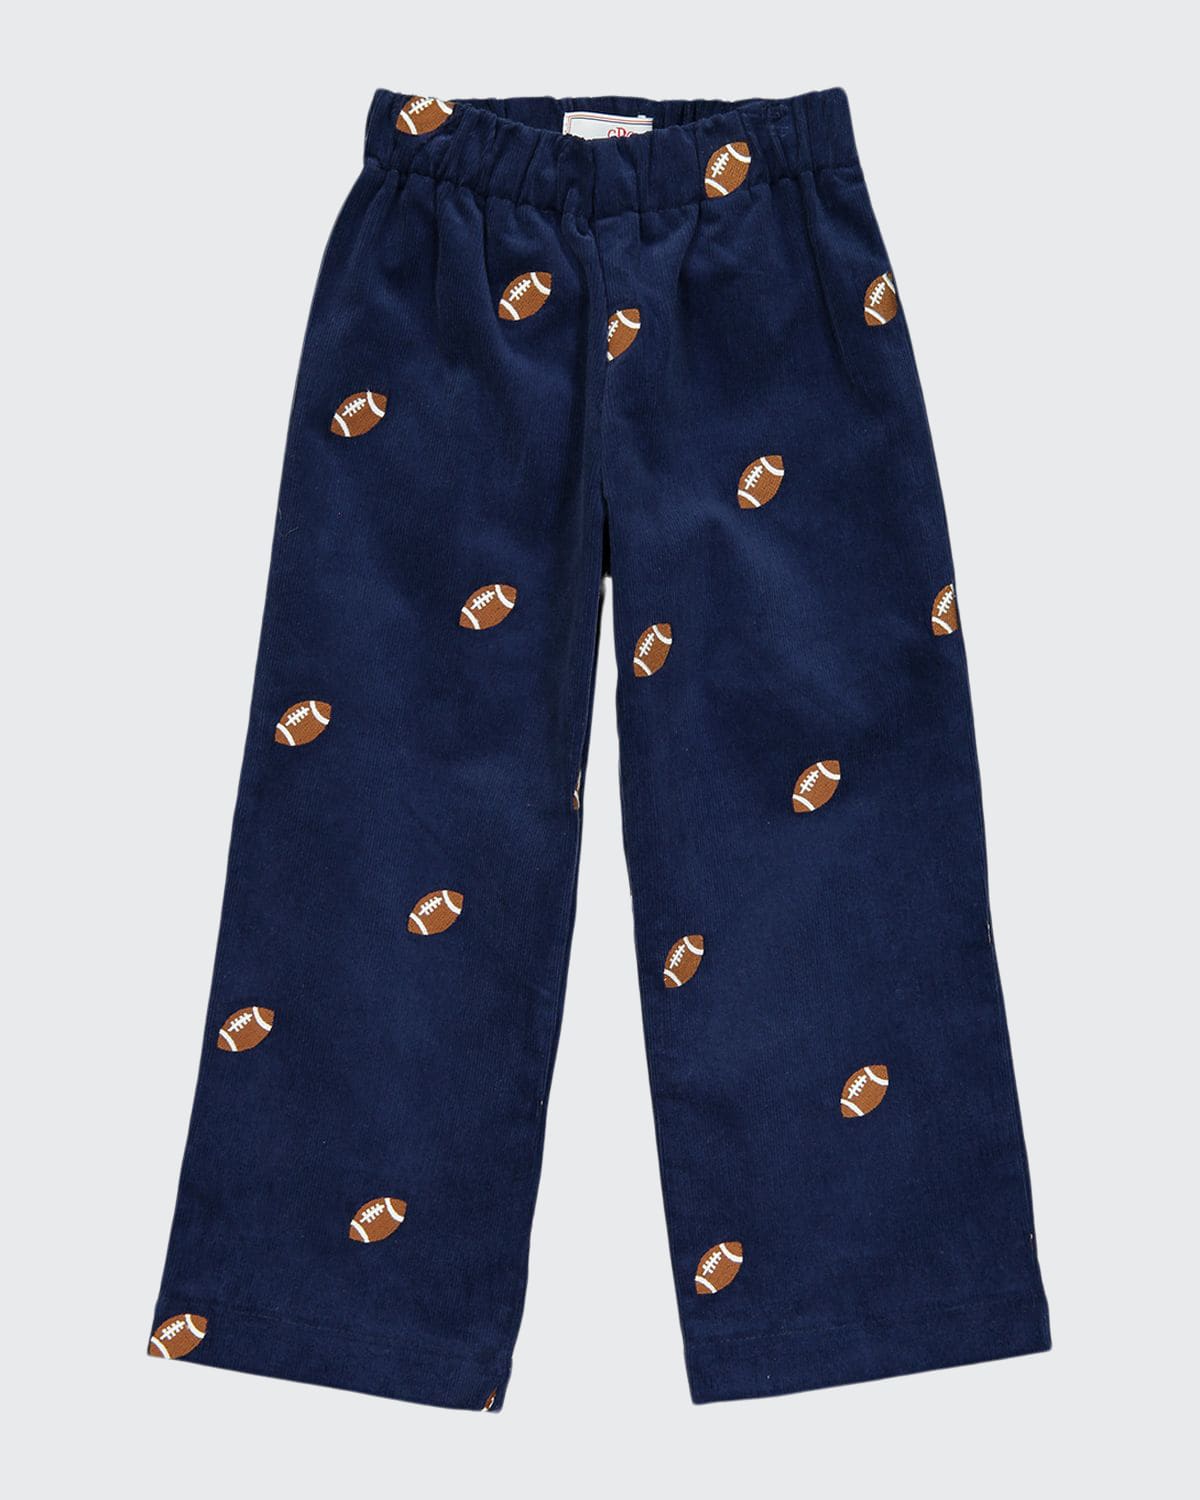 Classic Prep Childrenswear Boy's Myles Embroidered Corduroy Pants, Size 9M-4